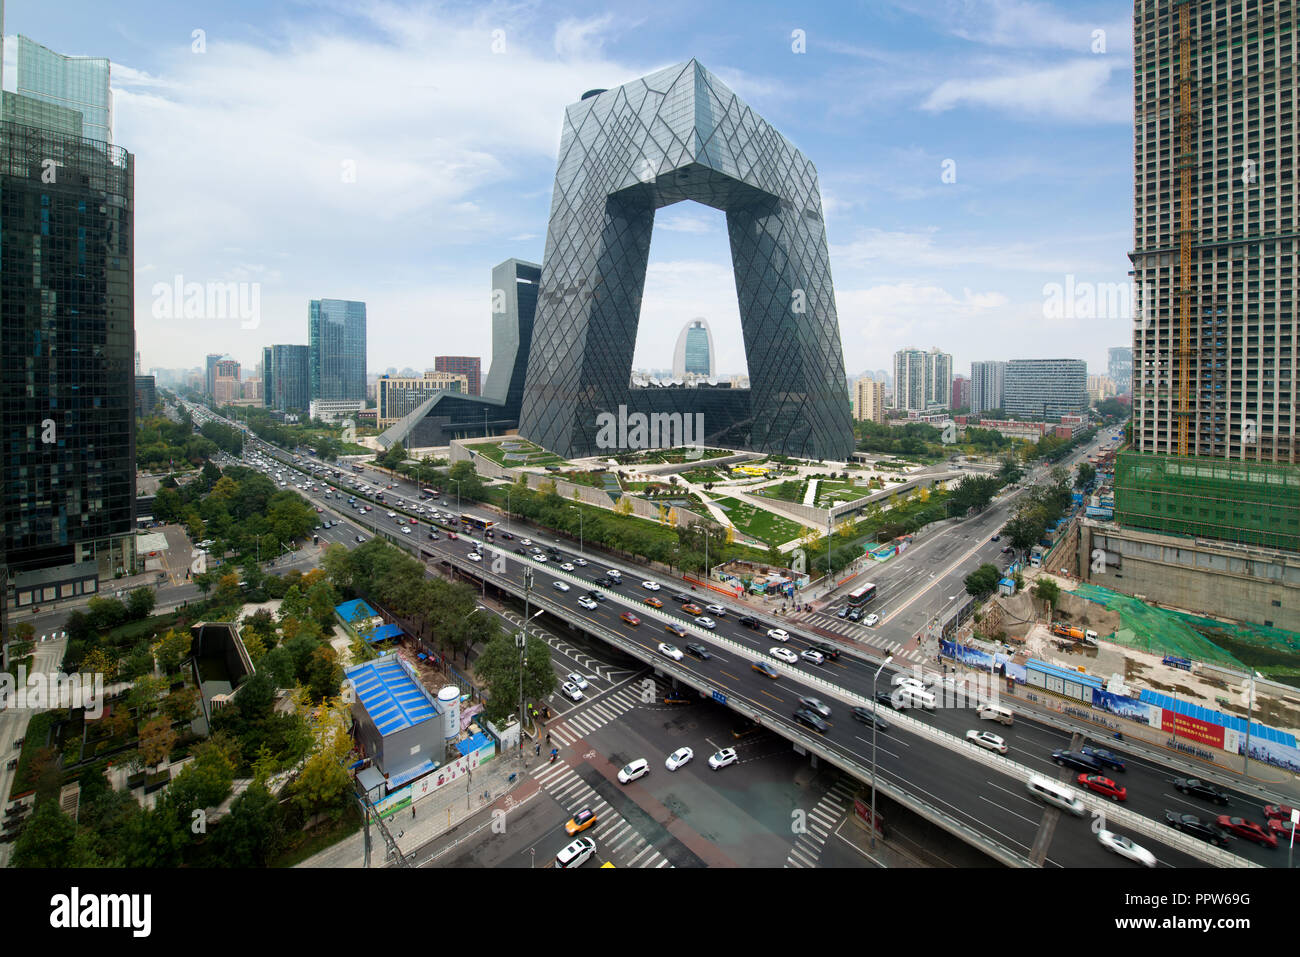 China Peking City. China Central Television (CCTV) Gebäude ist sehr spektakulär in Peking, China. Stockfoto